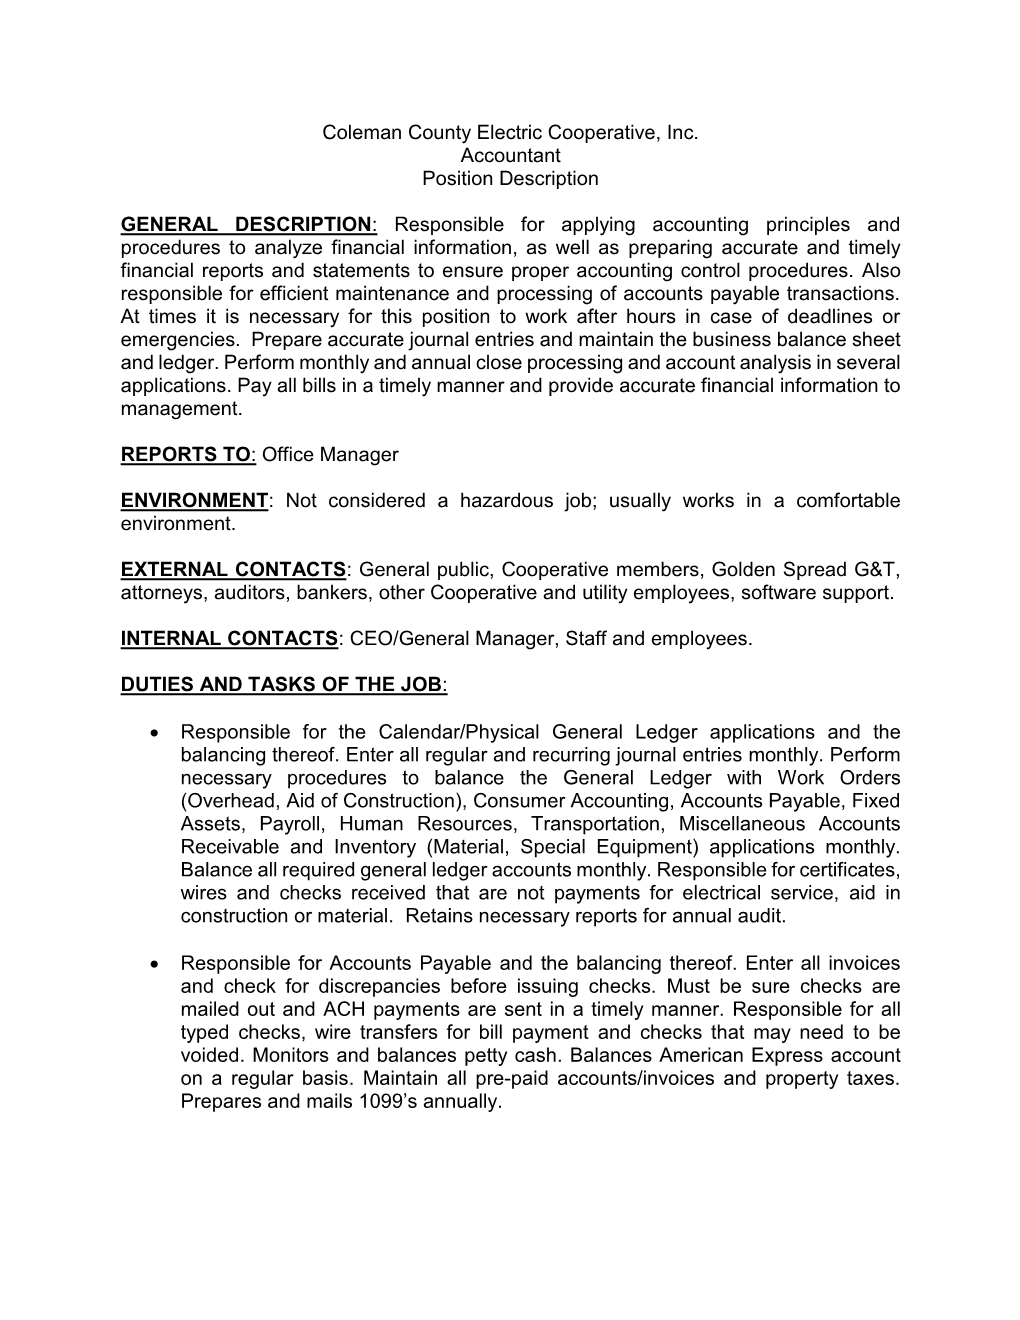 Coleman County Electric Cooperative, Inc. Accountant Position Description